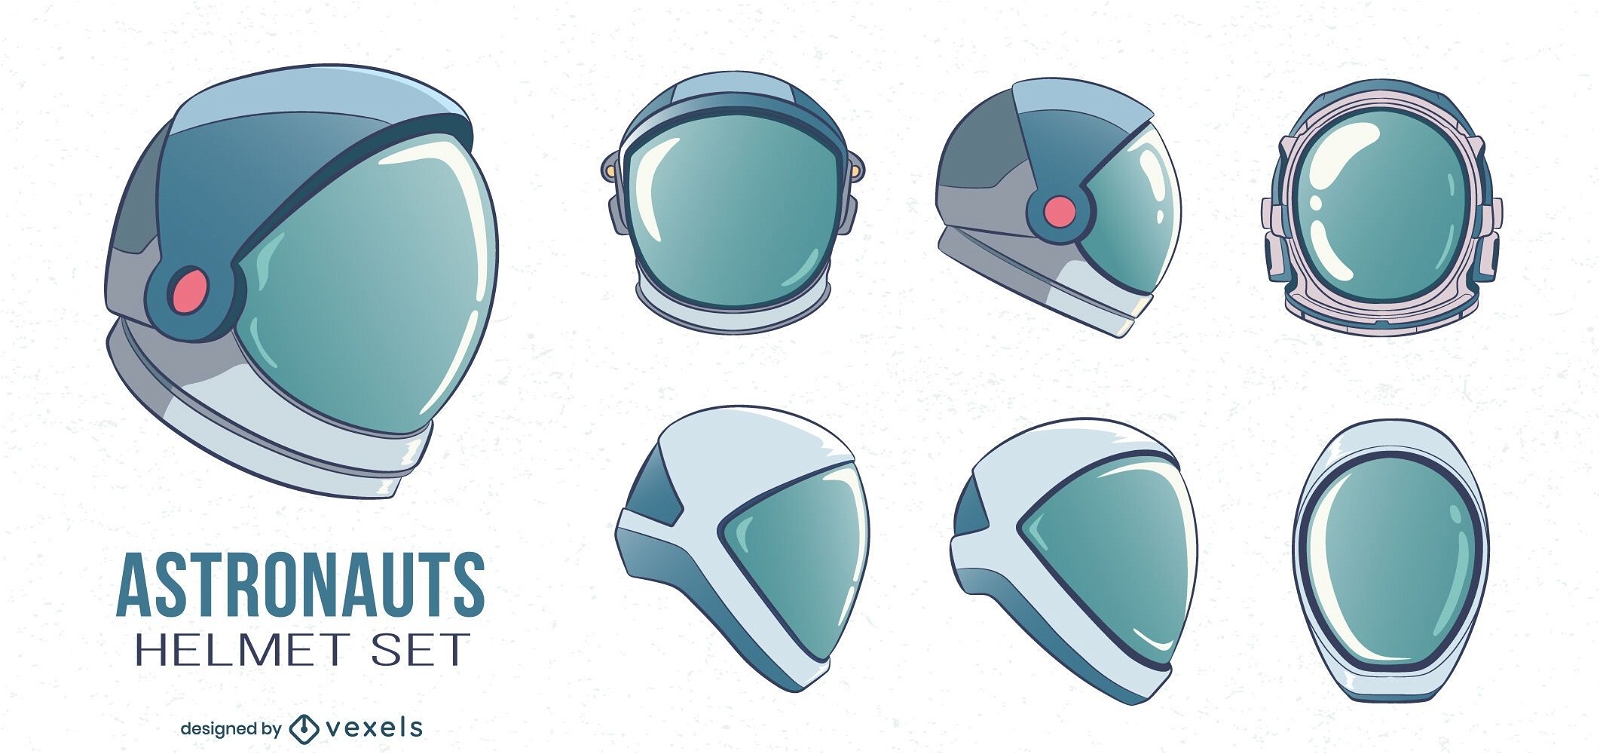 Astronaut helmets illustration set